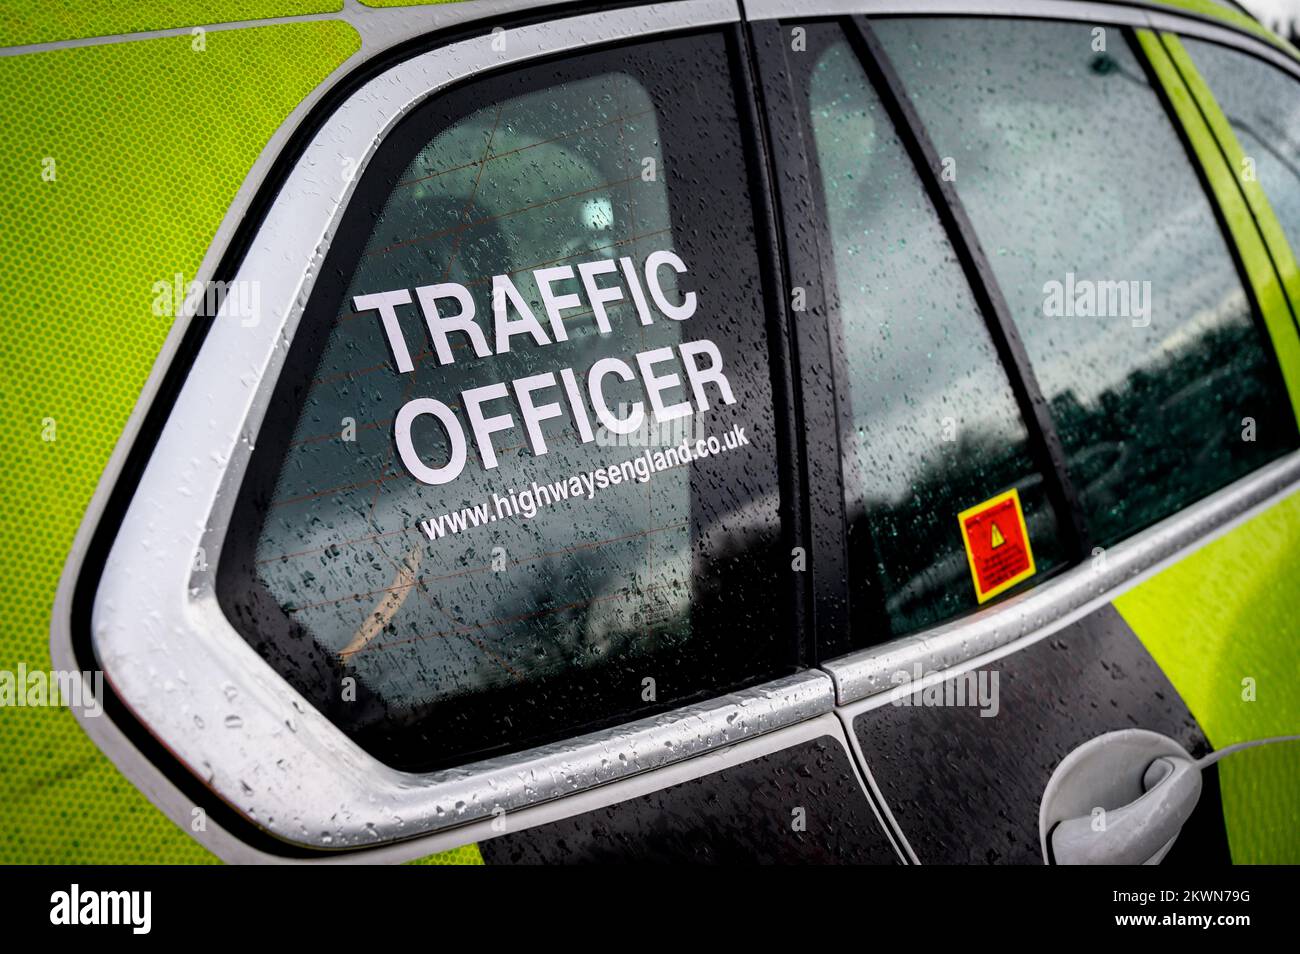 Straßenverkehrsoffizierfahrzeug, England. Stockfoto